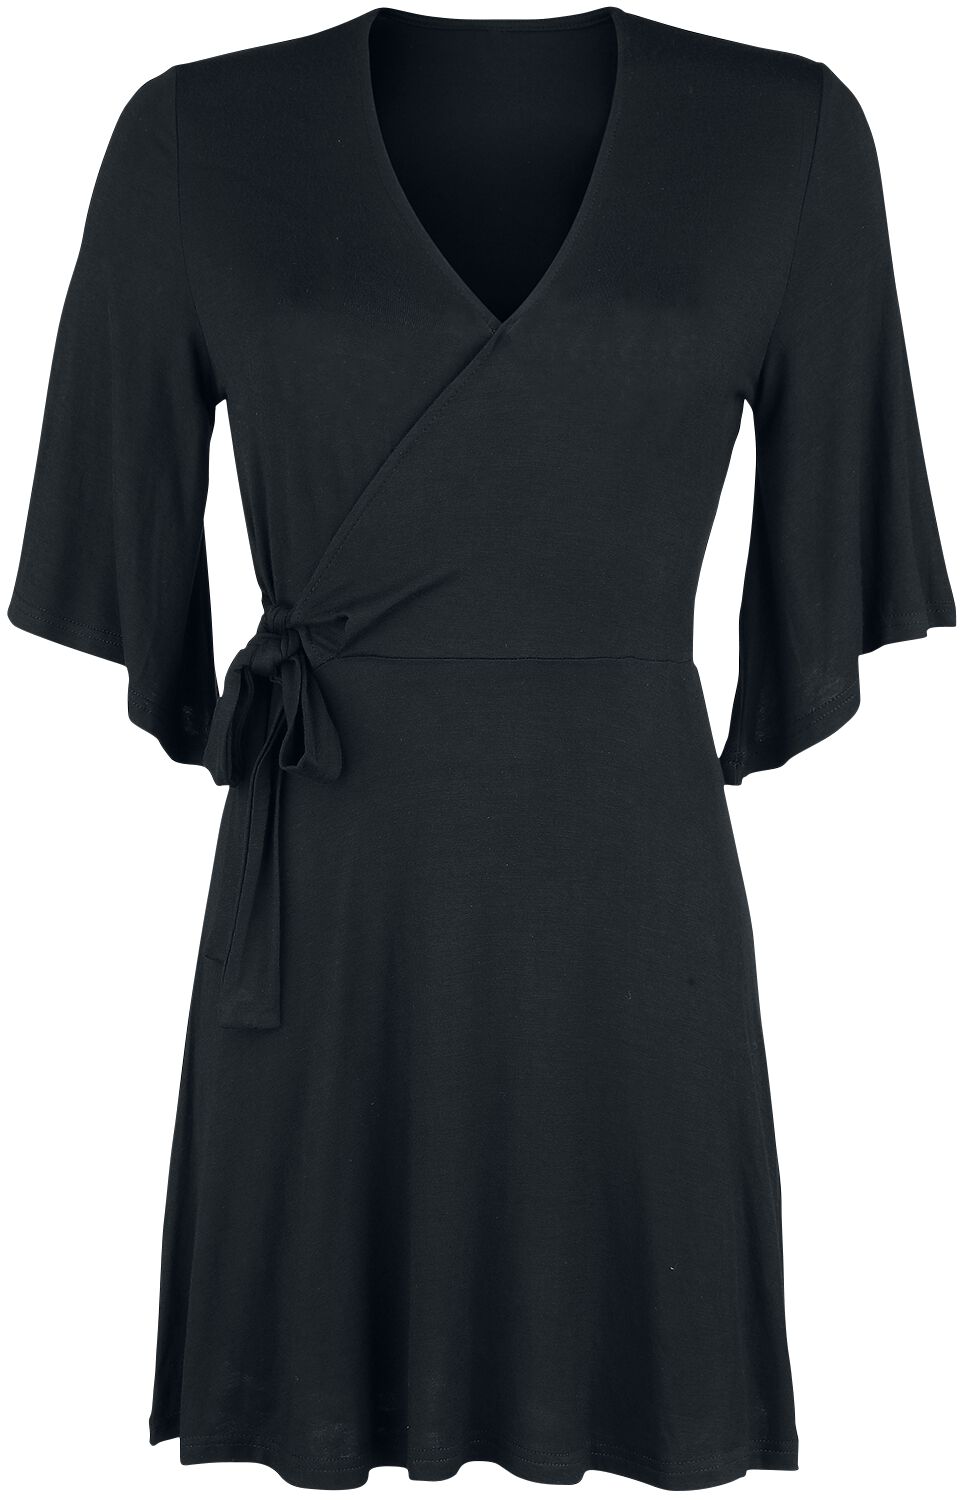 Forplay Side Knotted Sleeve Dress Short dress black